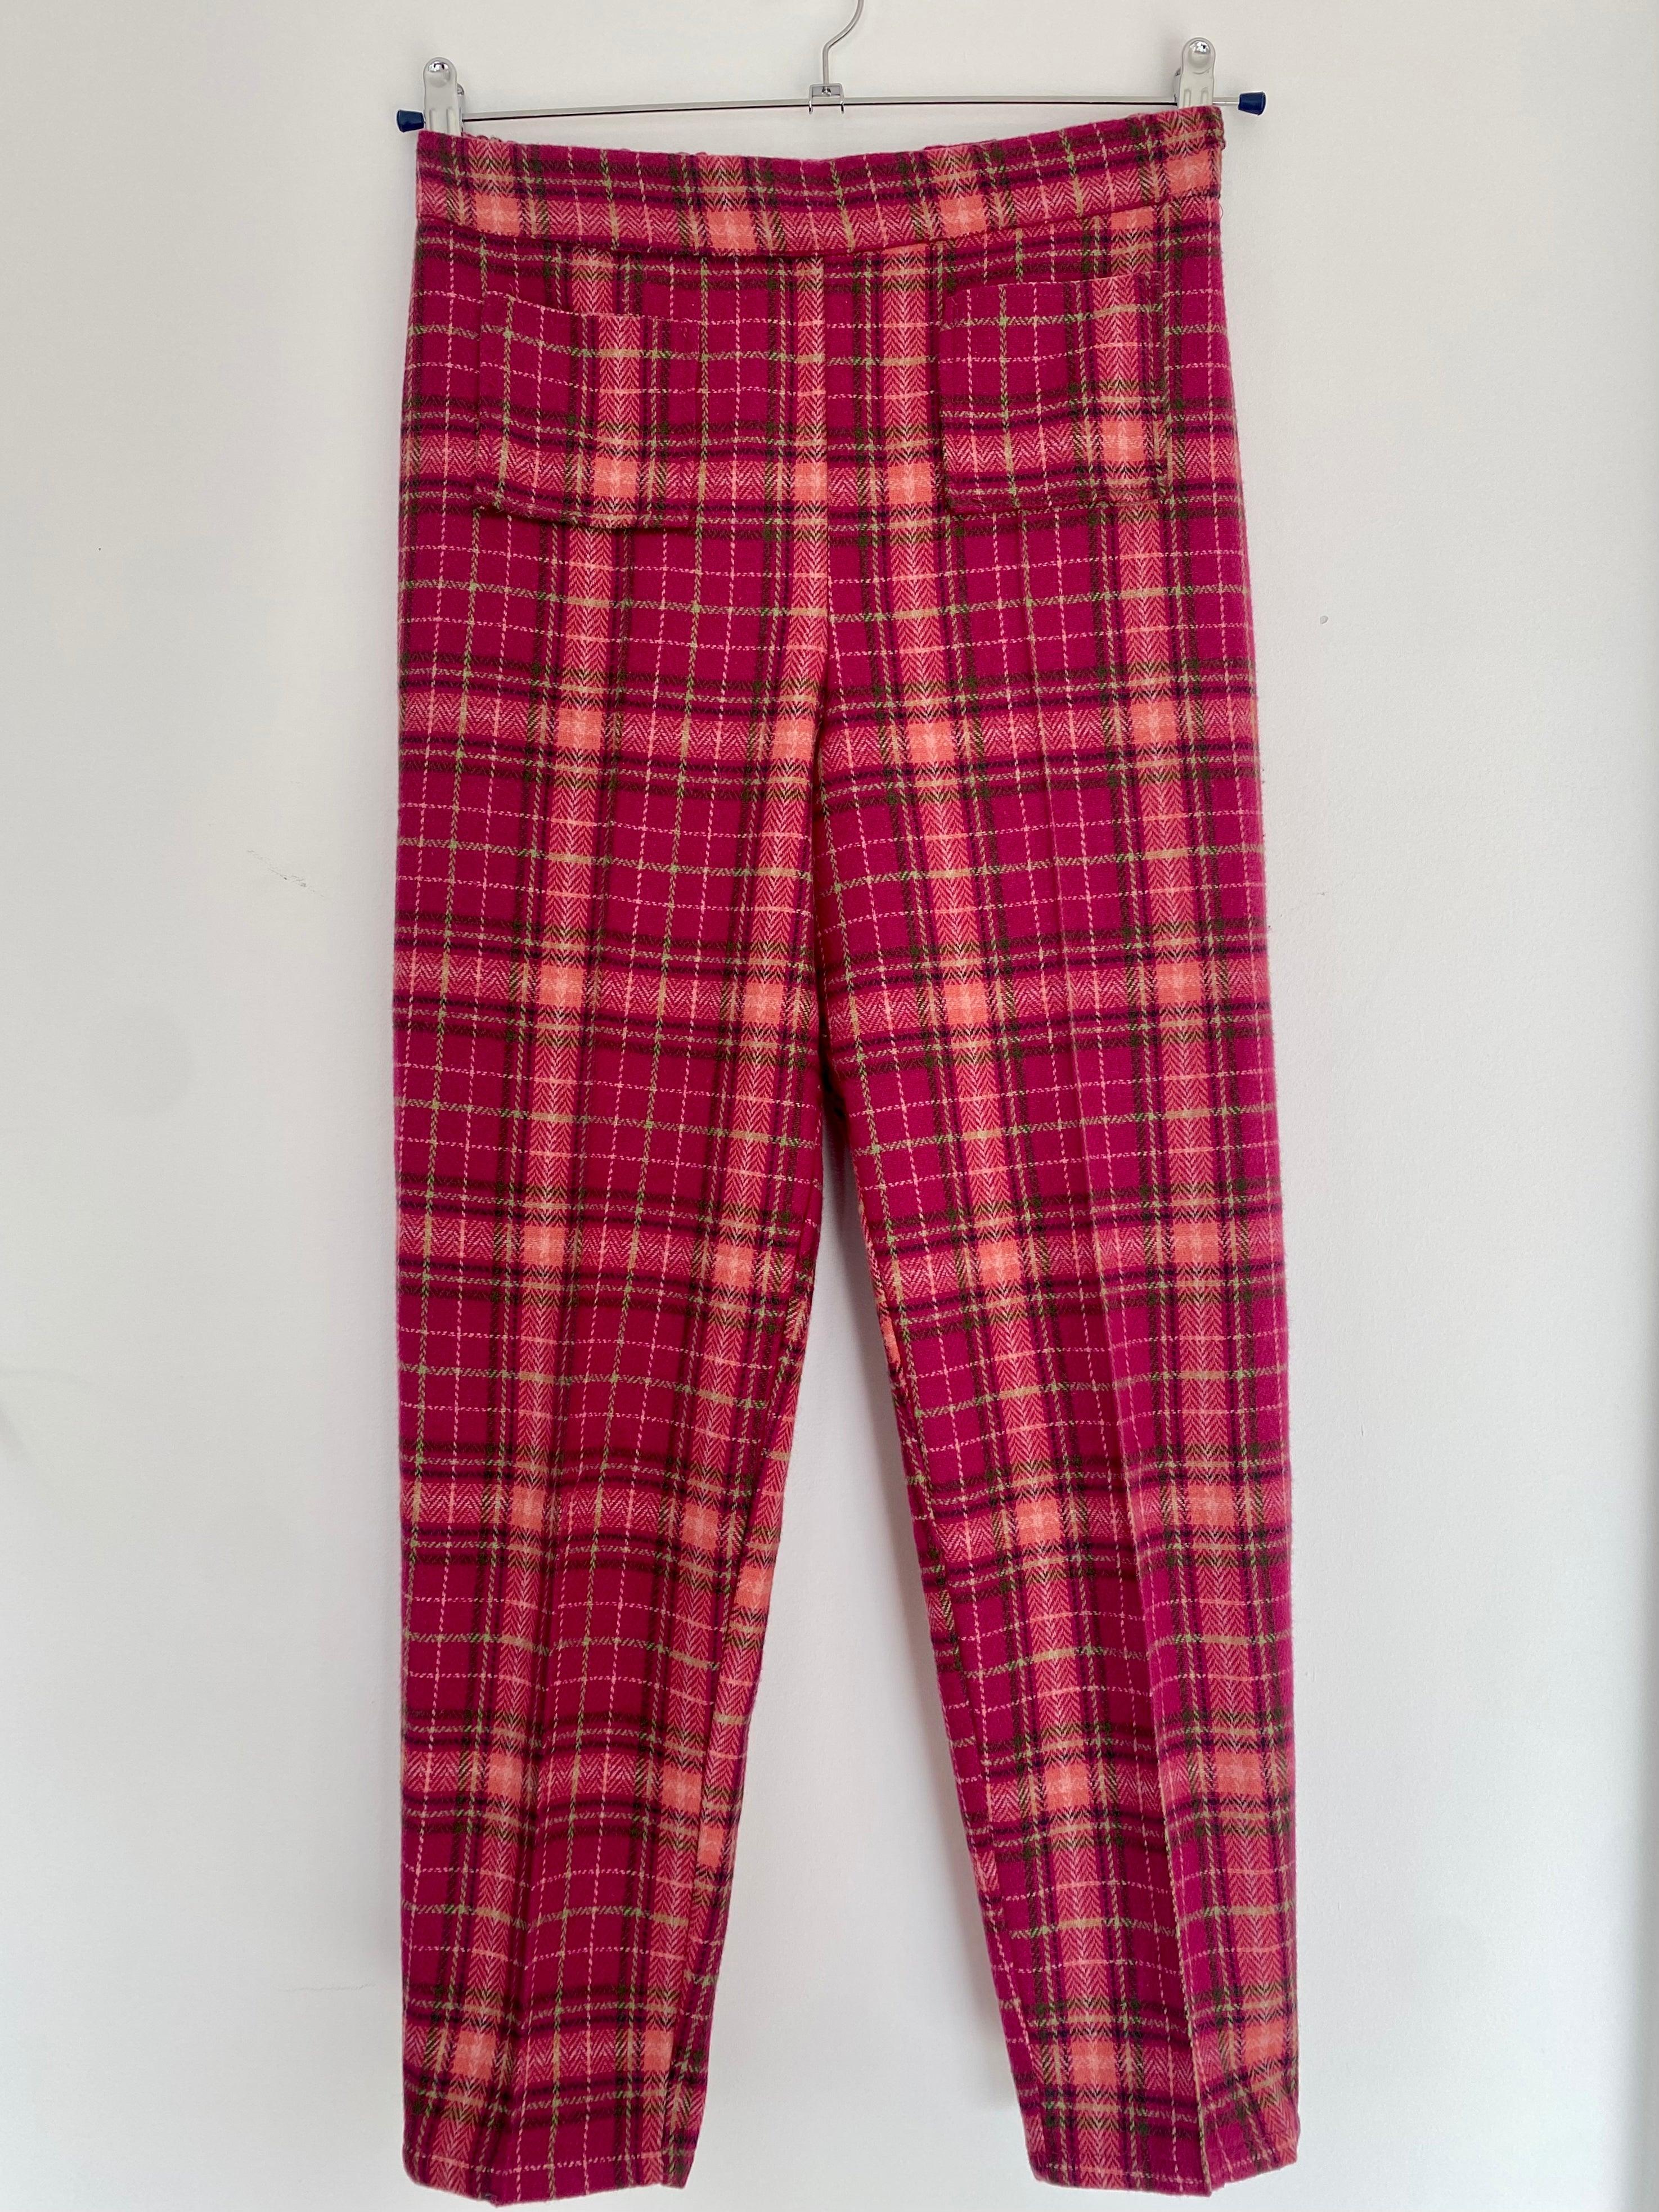 Cameron woollen pants - pink checks - Gingham Palace